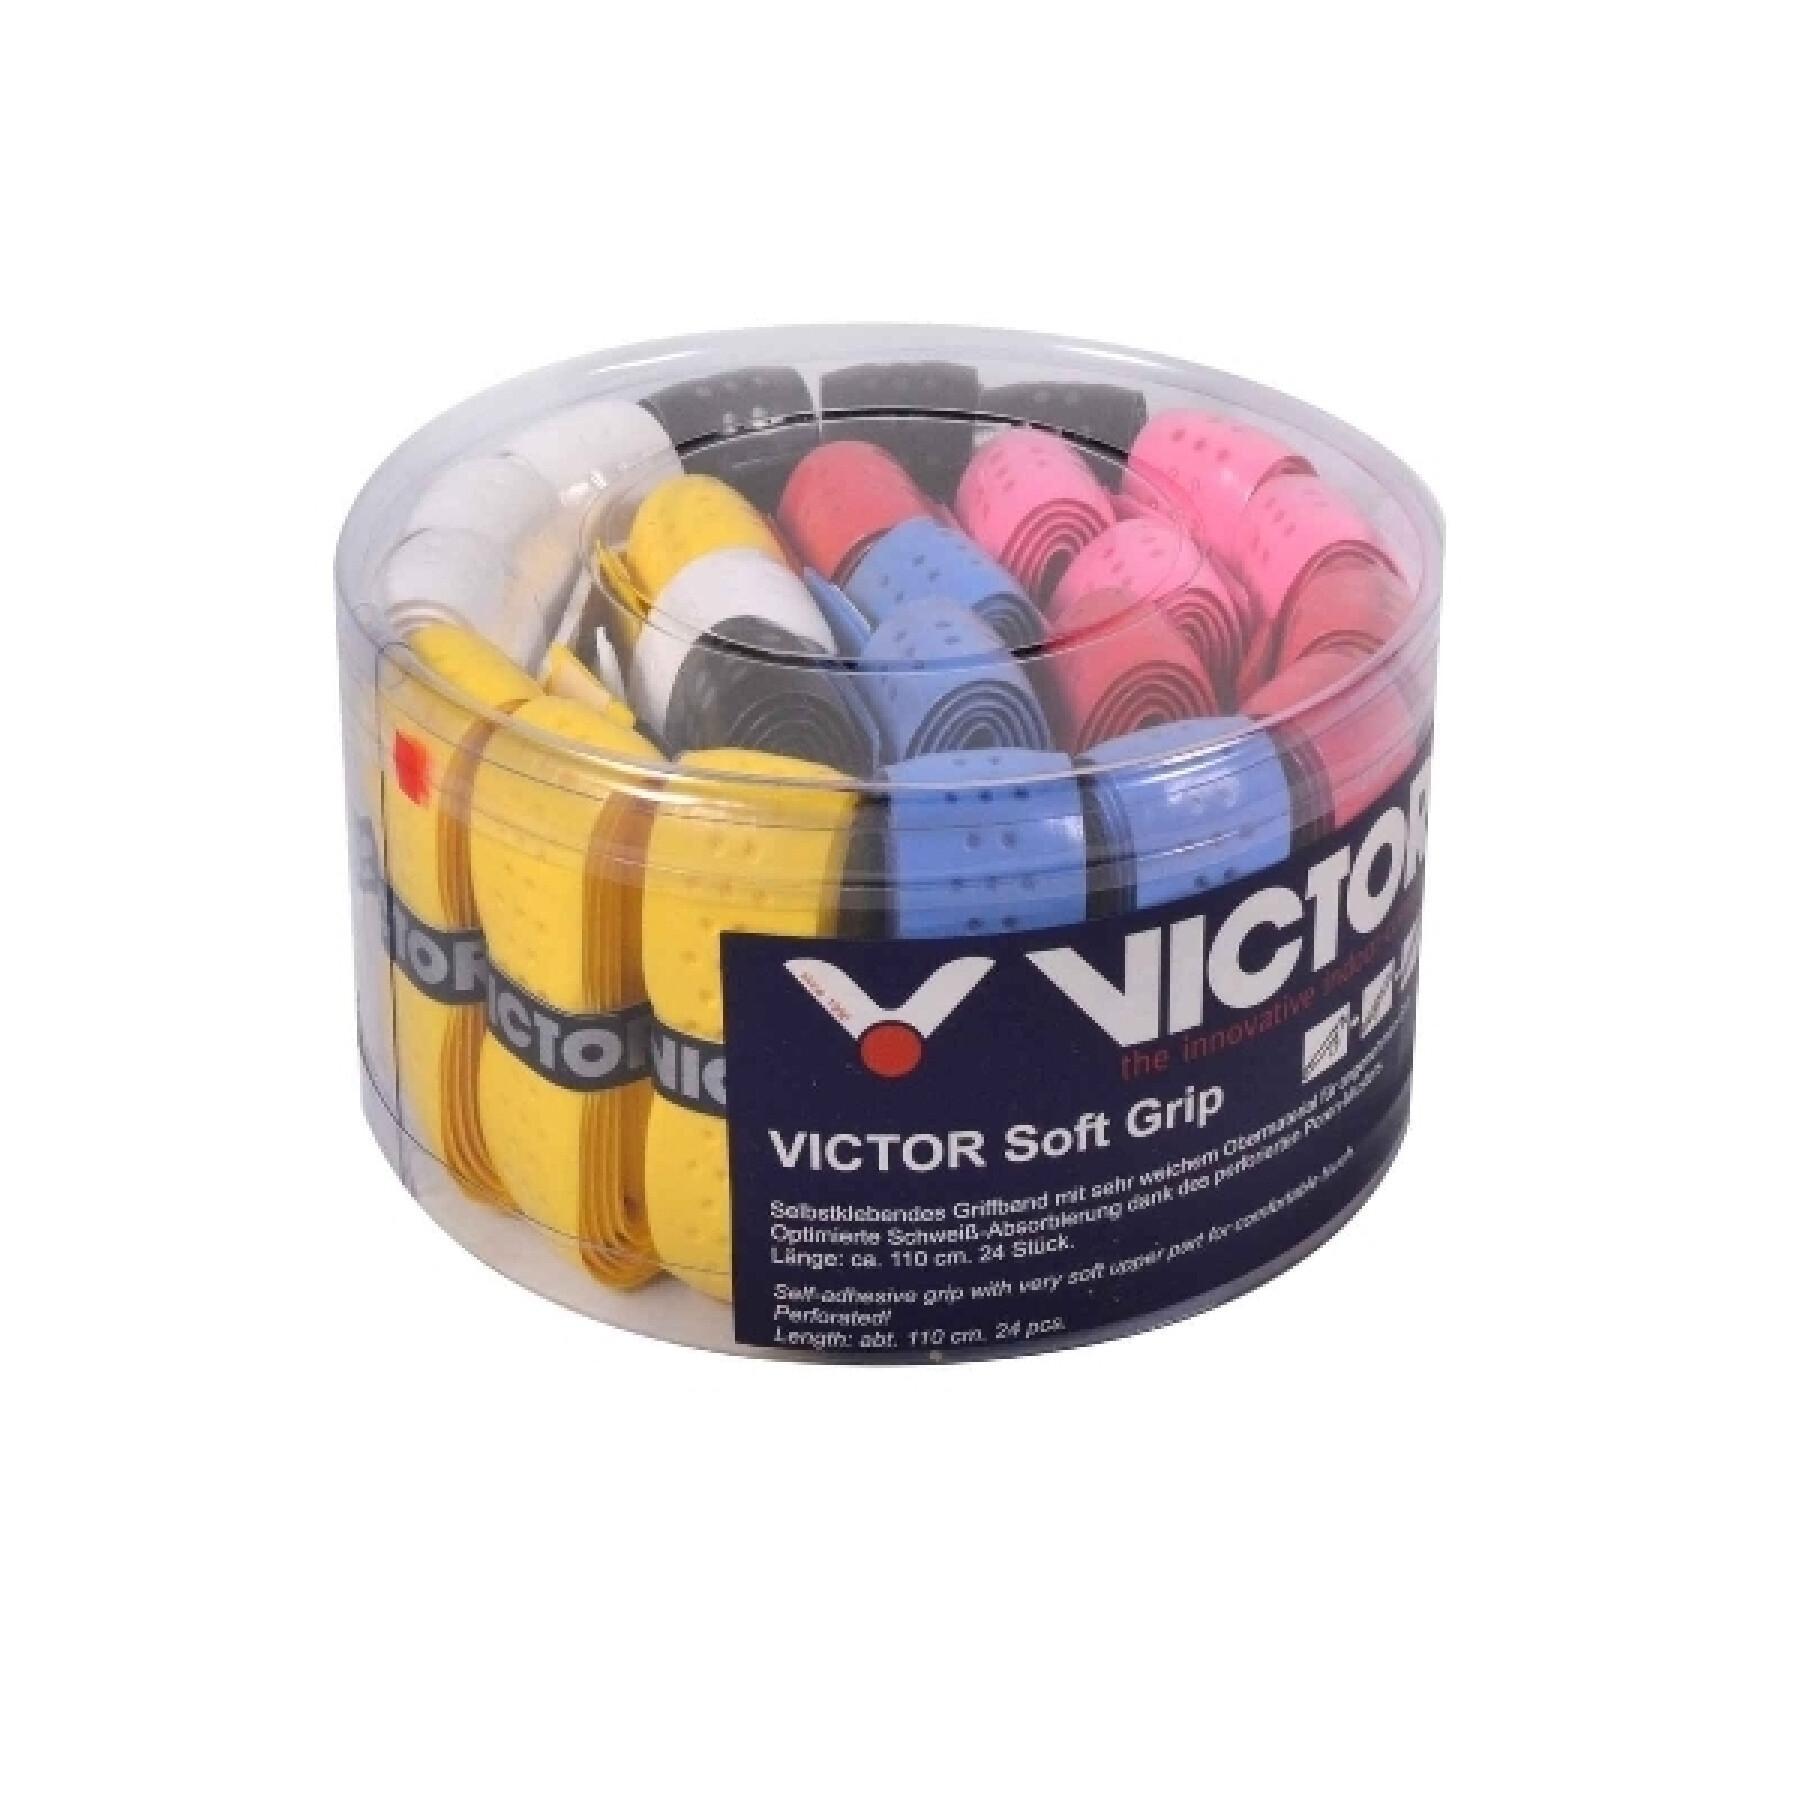 24 badminton grips Victor Soft